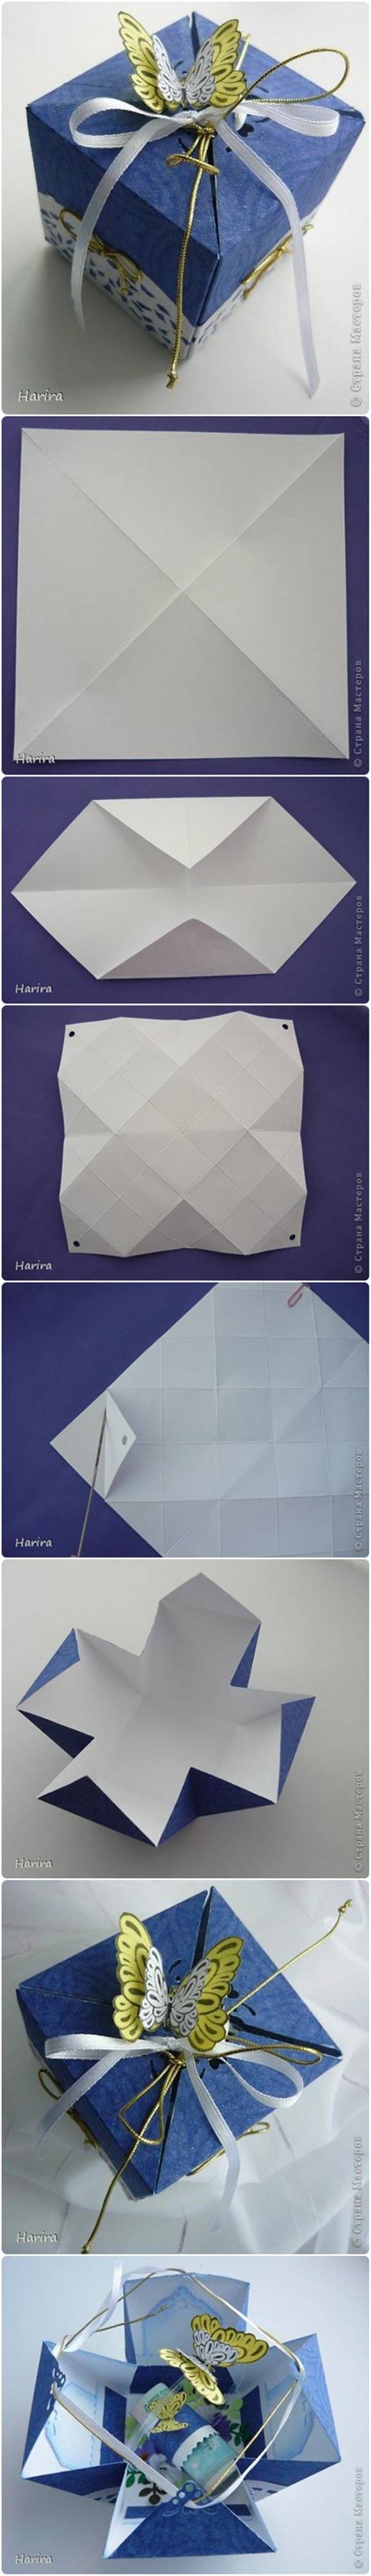 DIY Pretty Origami Gift Box